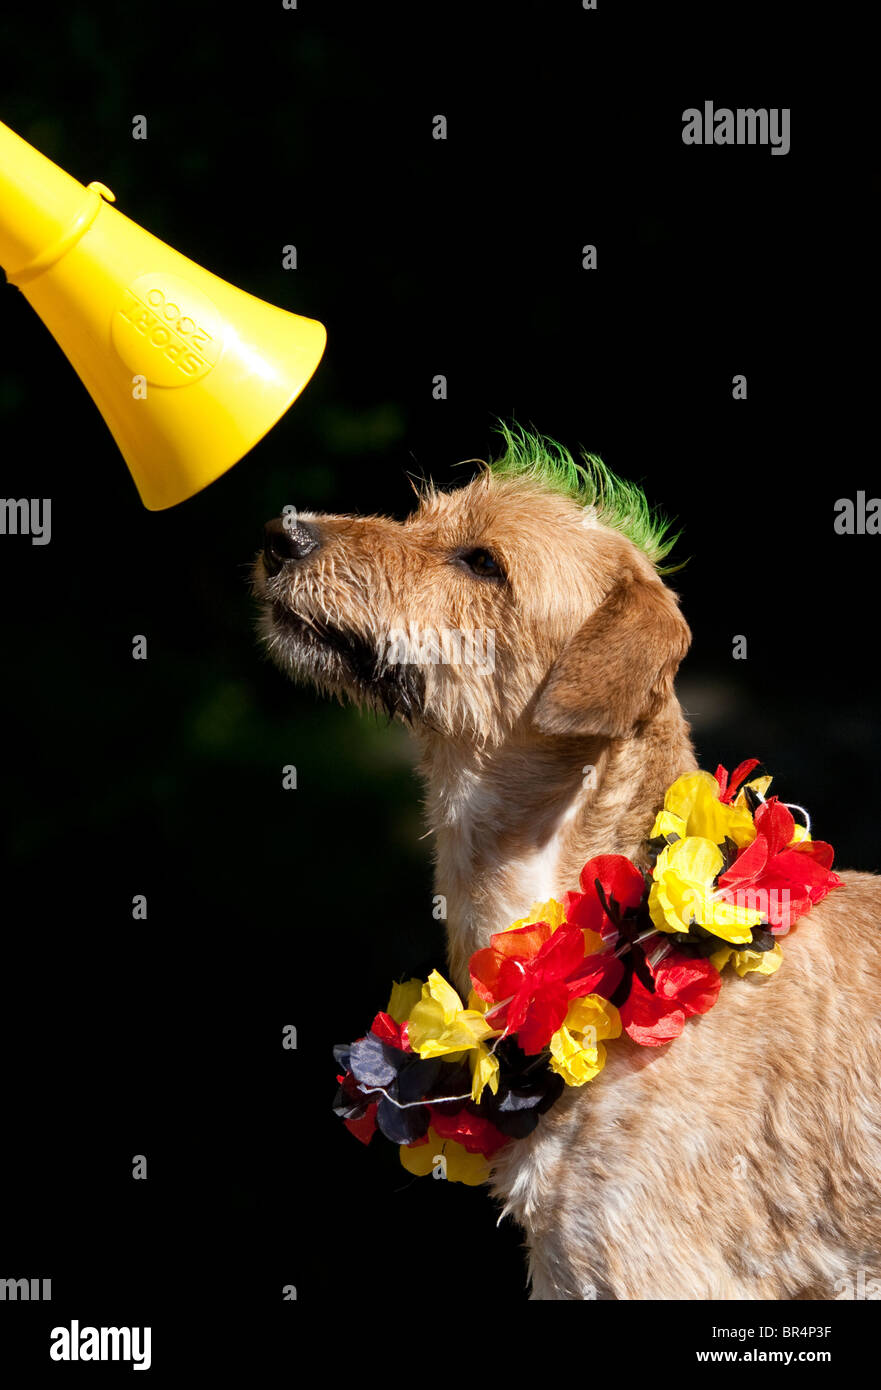 Dog lei and mohawk haircut looking at vuvuzela Stock Photo